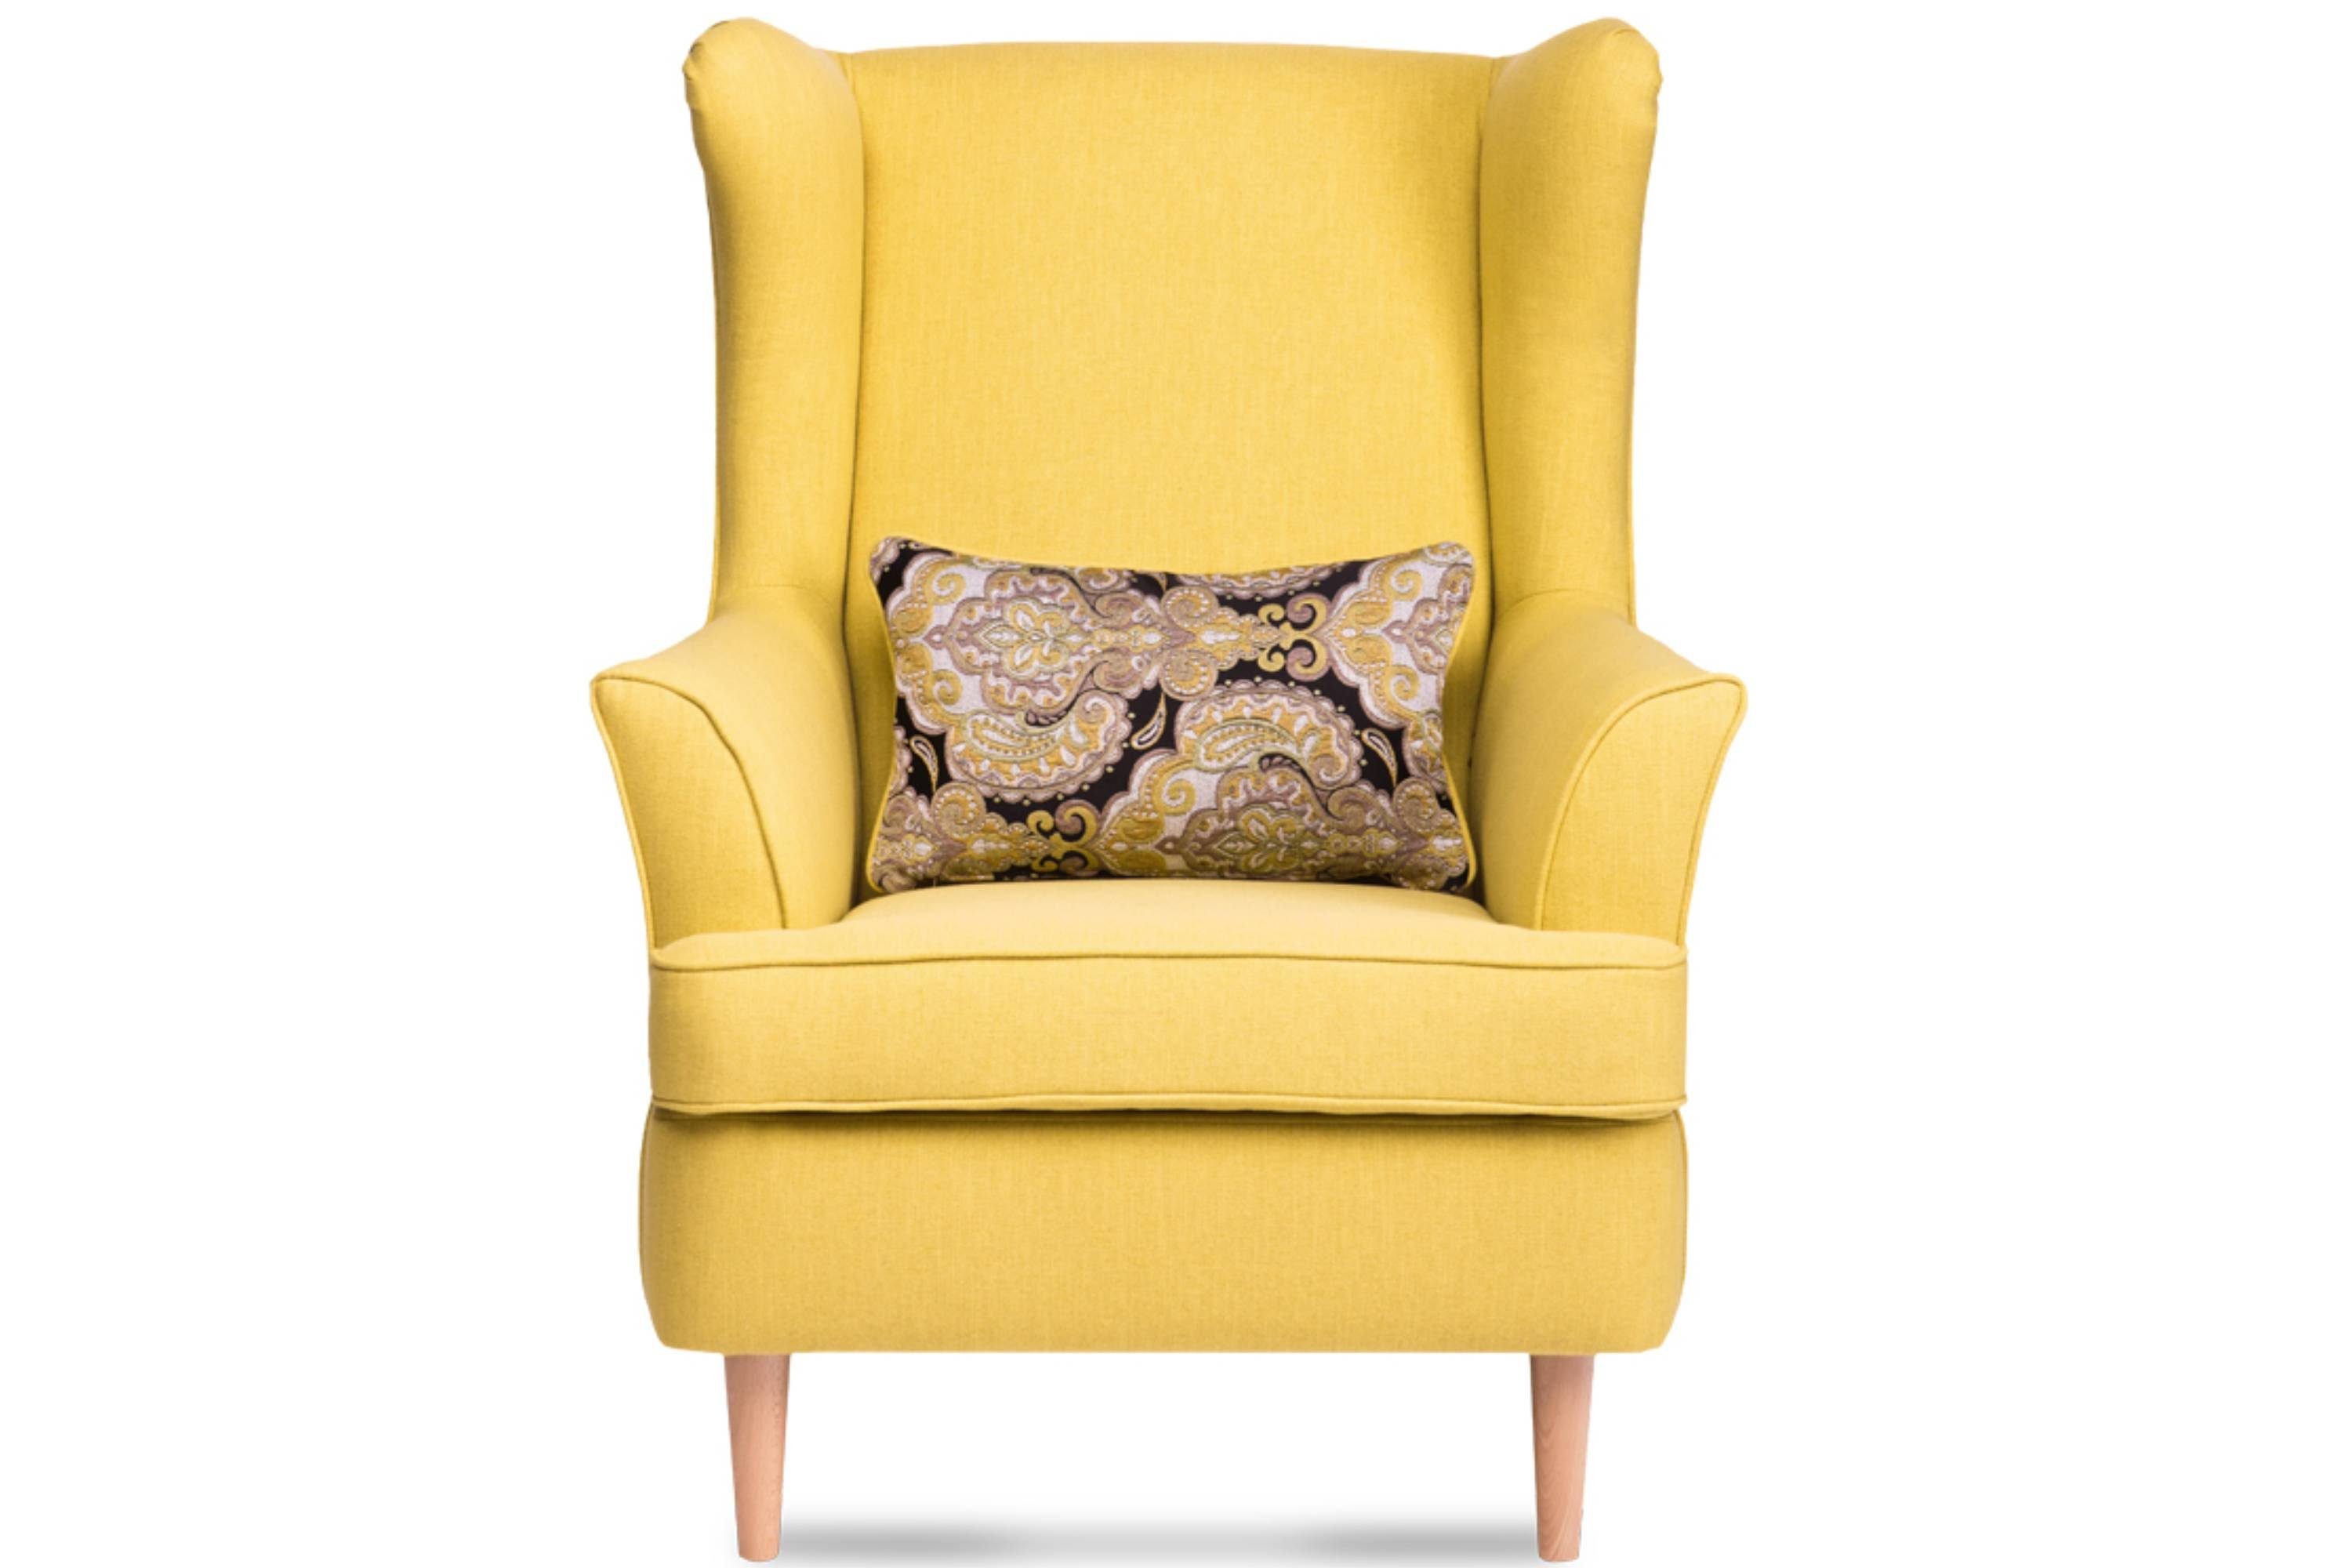 Kissen Füße, Sessel, Ohrensessel Design, STRALIS inklusive Konsimo zeitloses dekorativem hohe